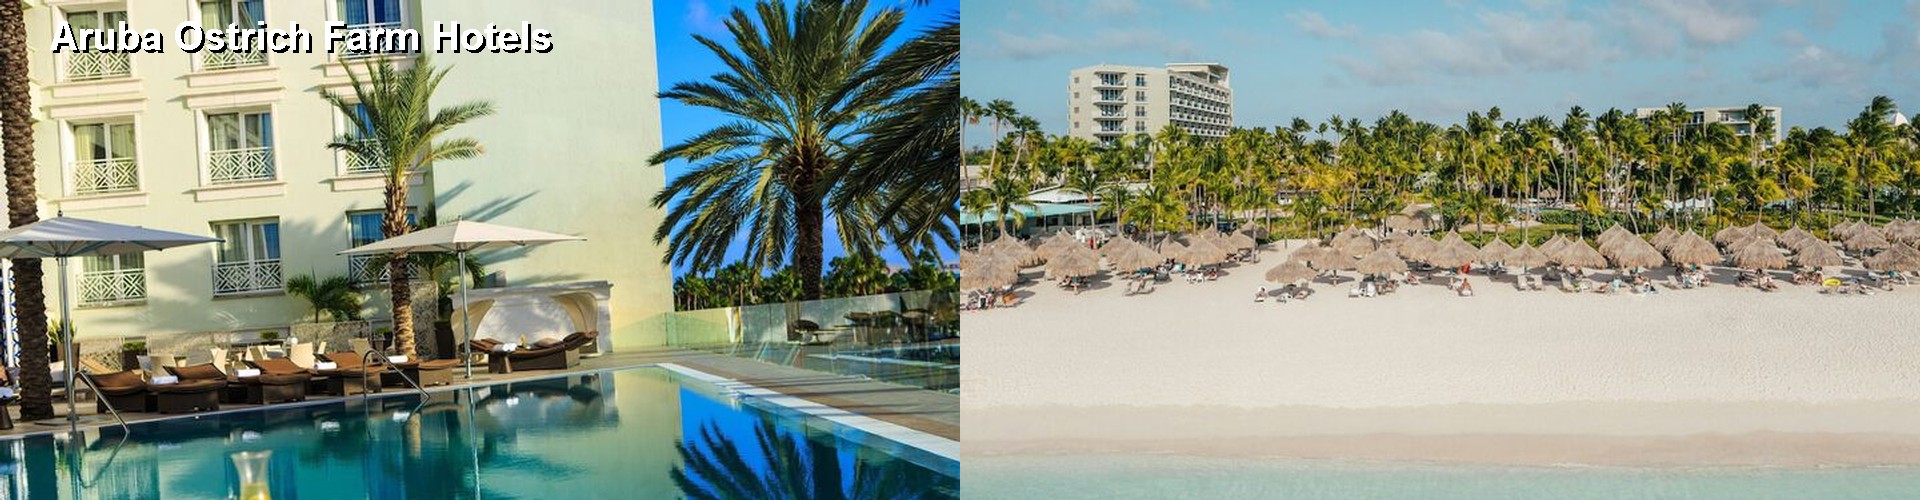 5 Best Hotels near Aruba Ostrich Farm